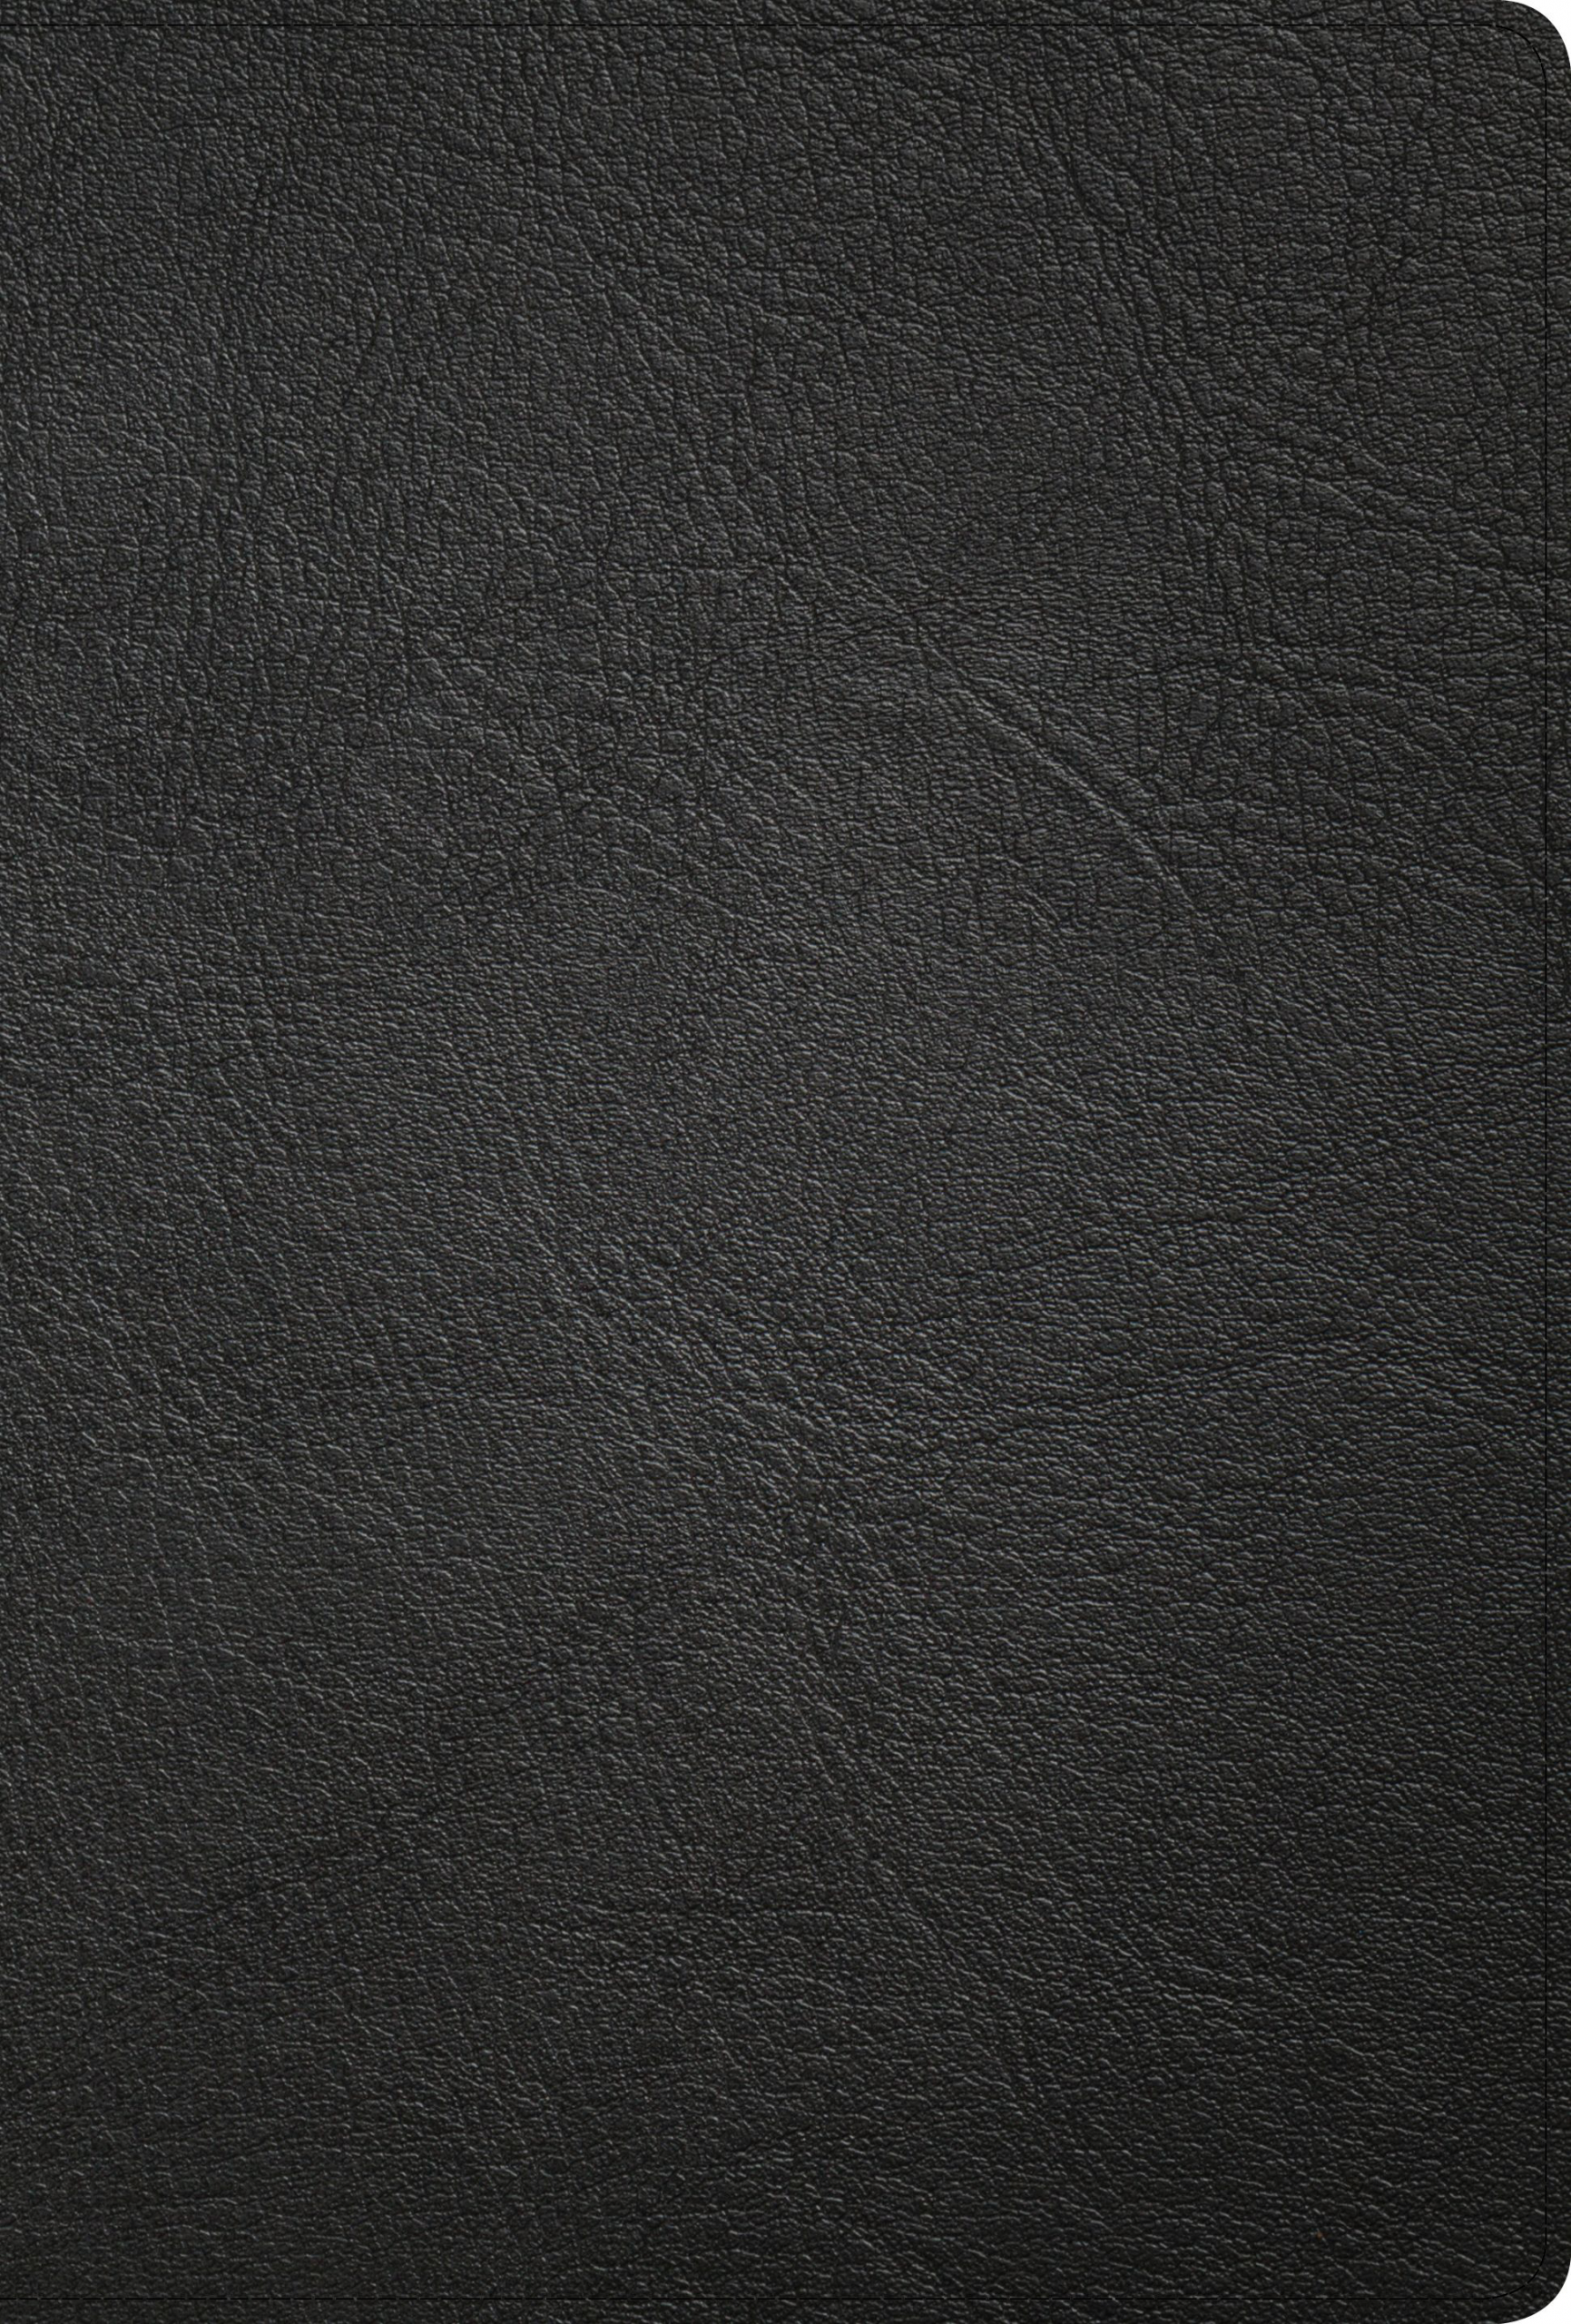 KJV Large Print Ultrathin Reference Bible, Black Premium Leather, Black-letter Edition, Indexed